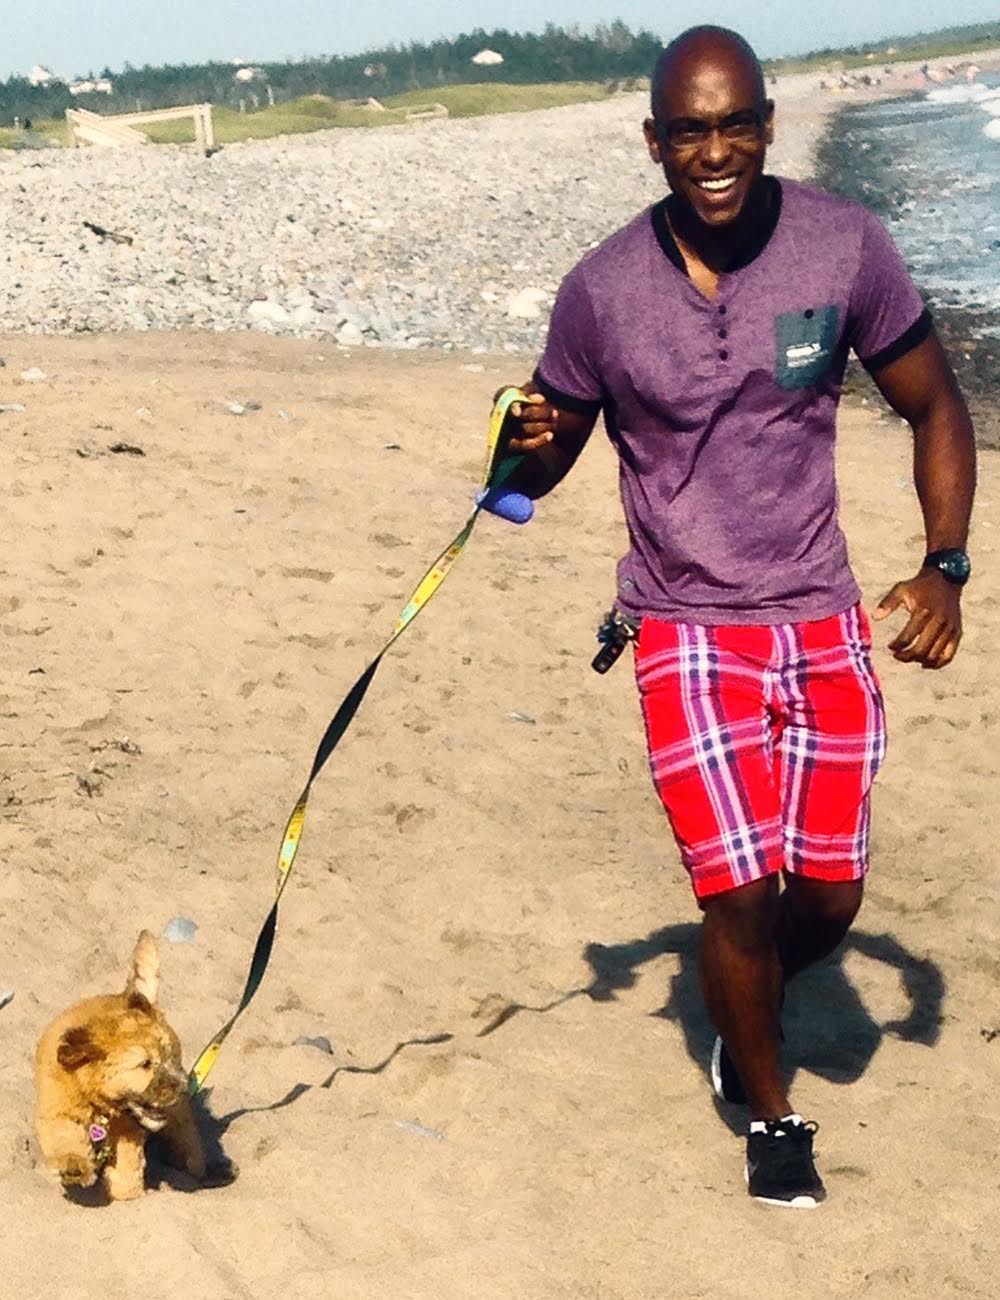 Man running with dog on beach.